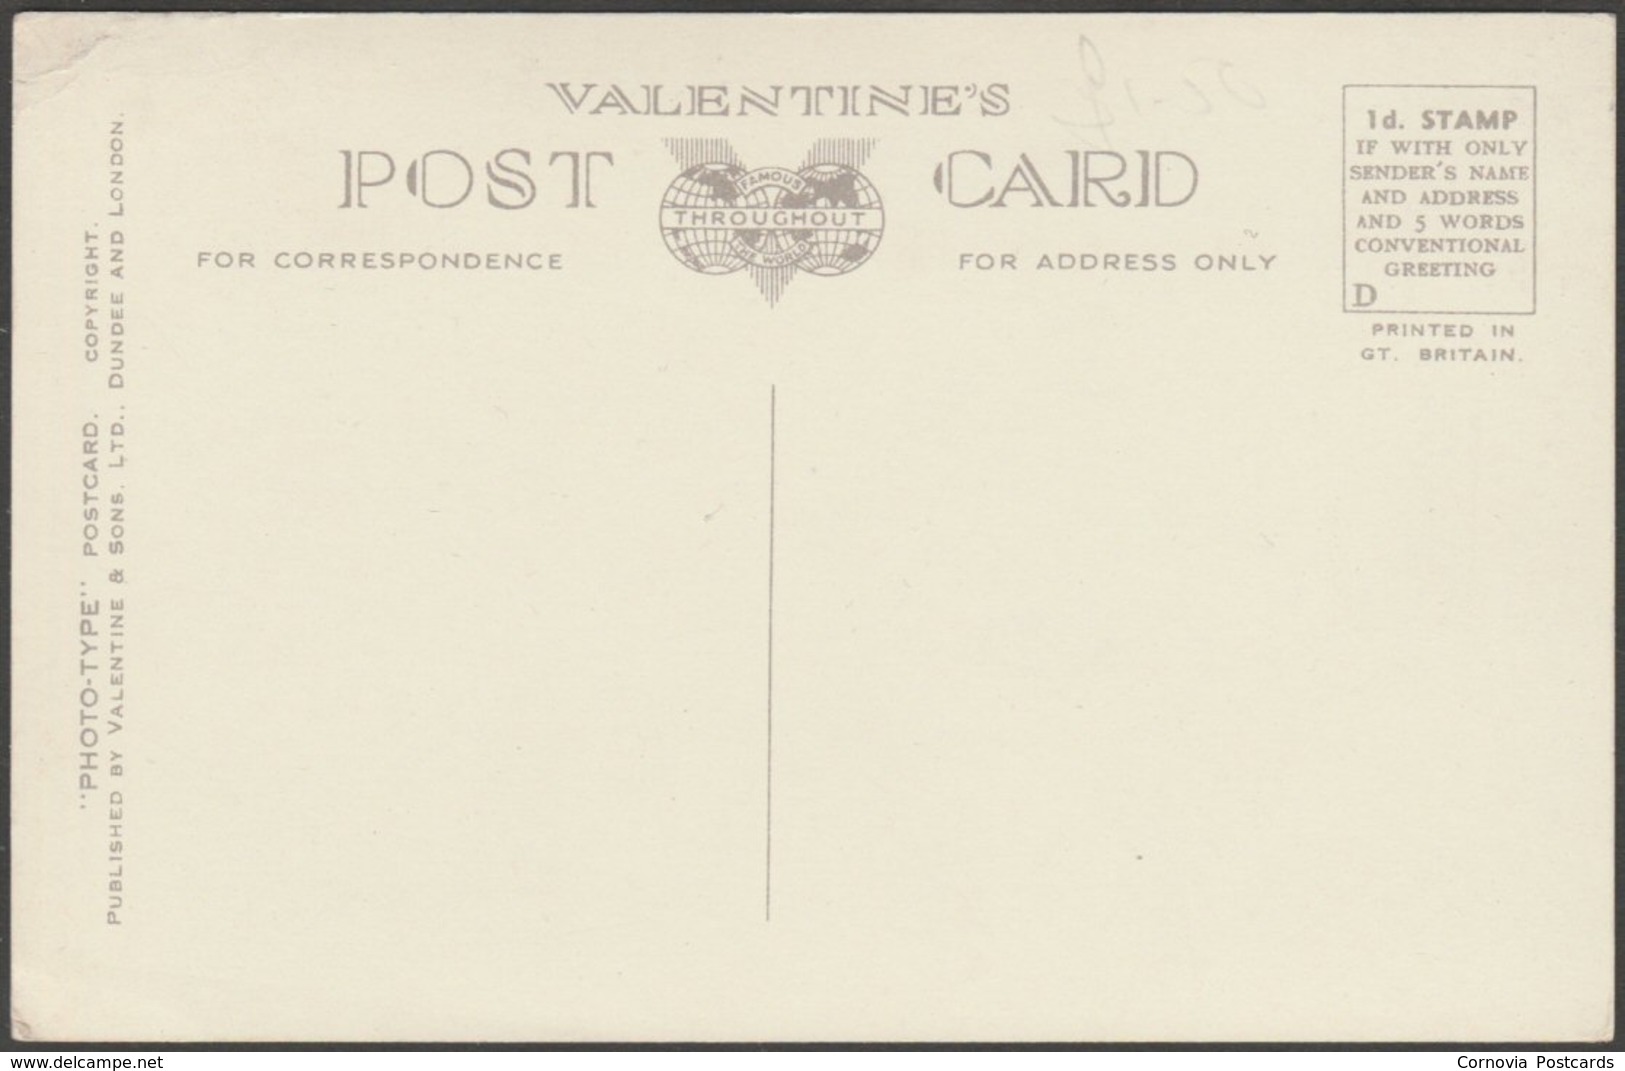 The Promenade, Cheltenham, Gloucestershire, C.1940 - Valentine's Postcard - Cheltenham